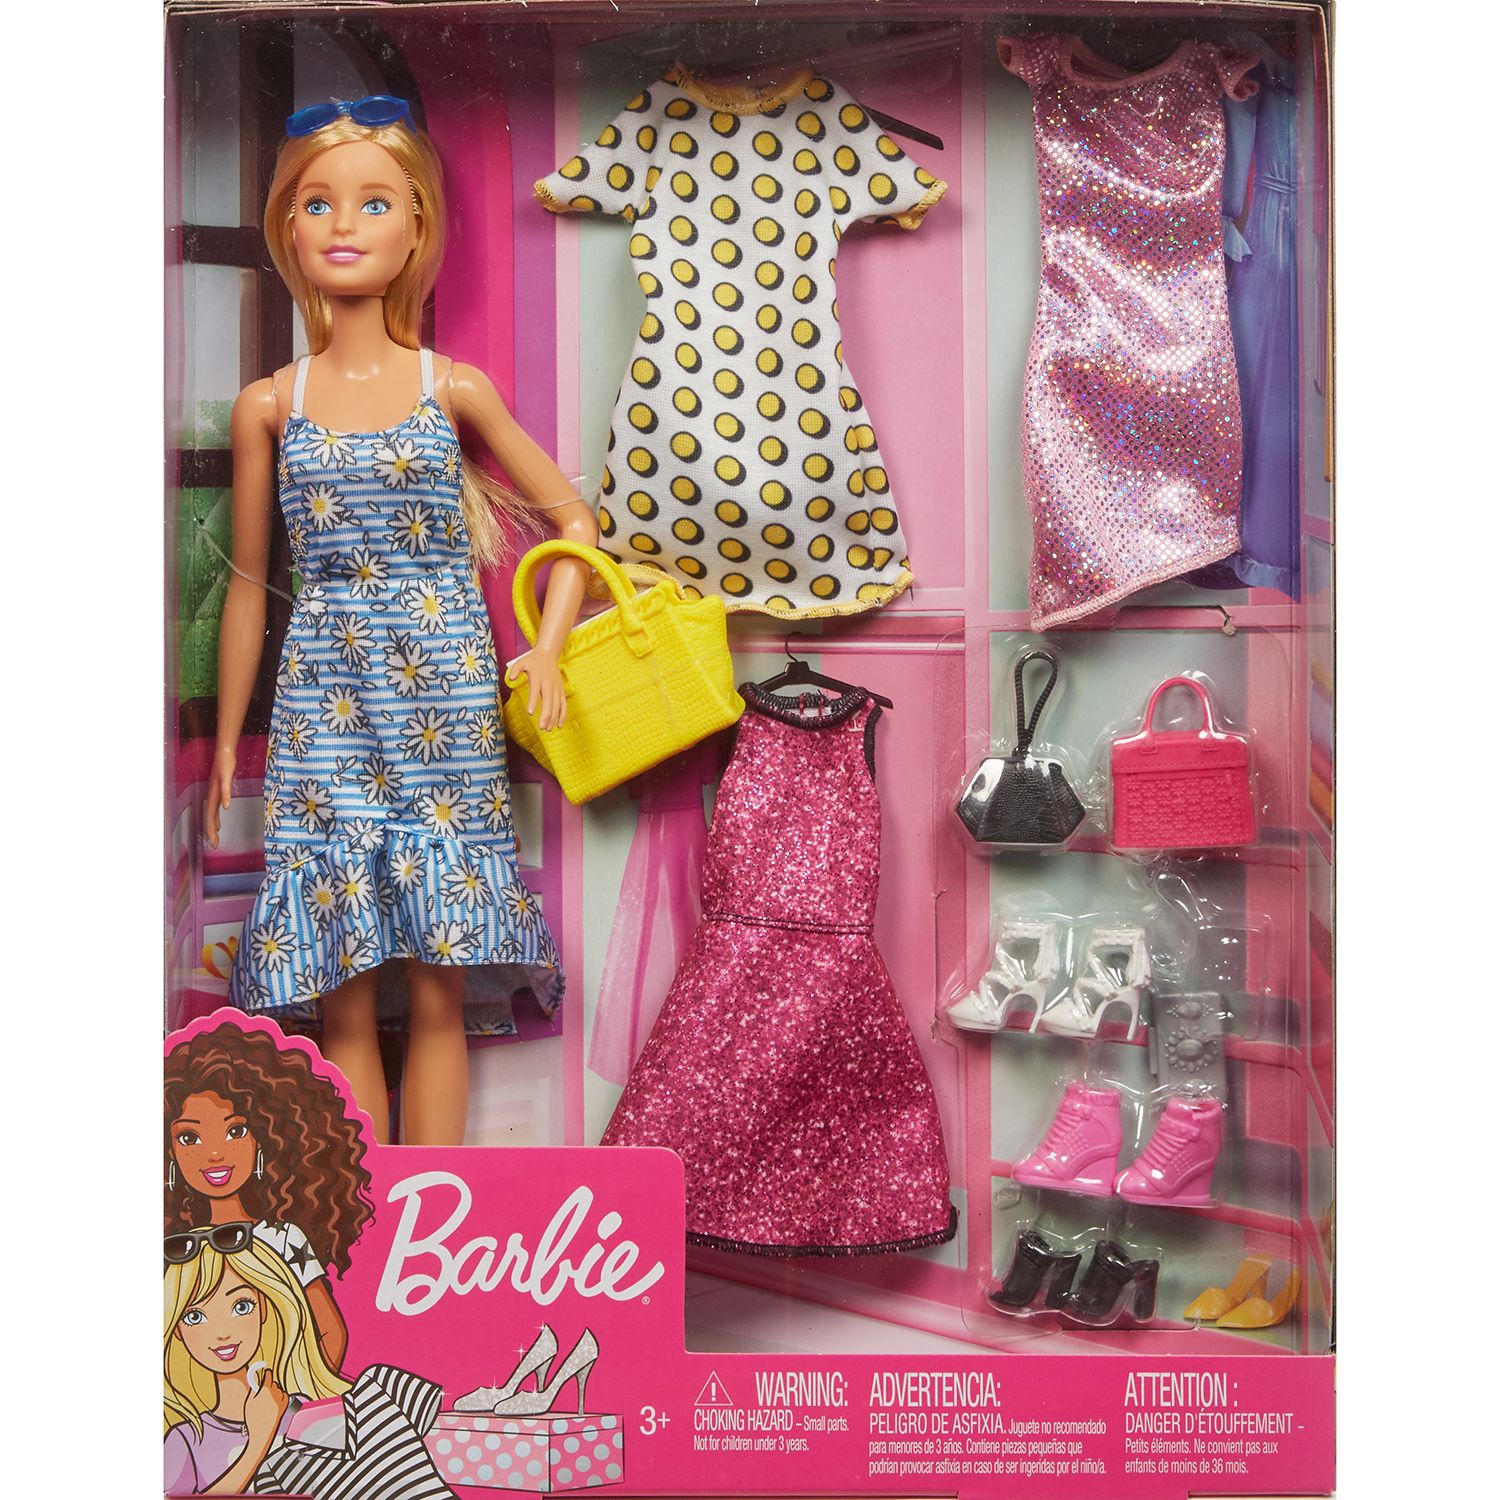 barbie doll set price